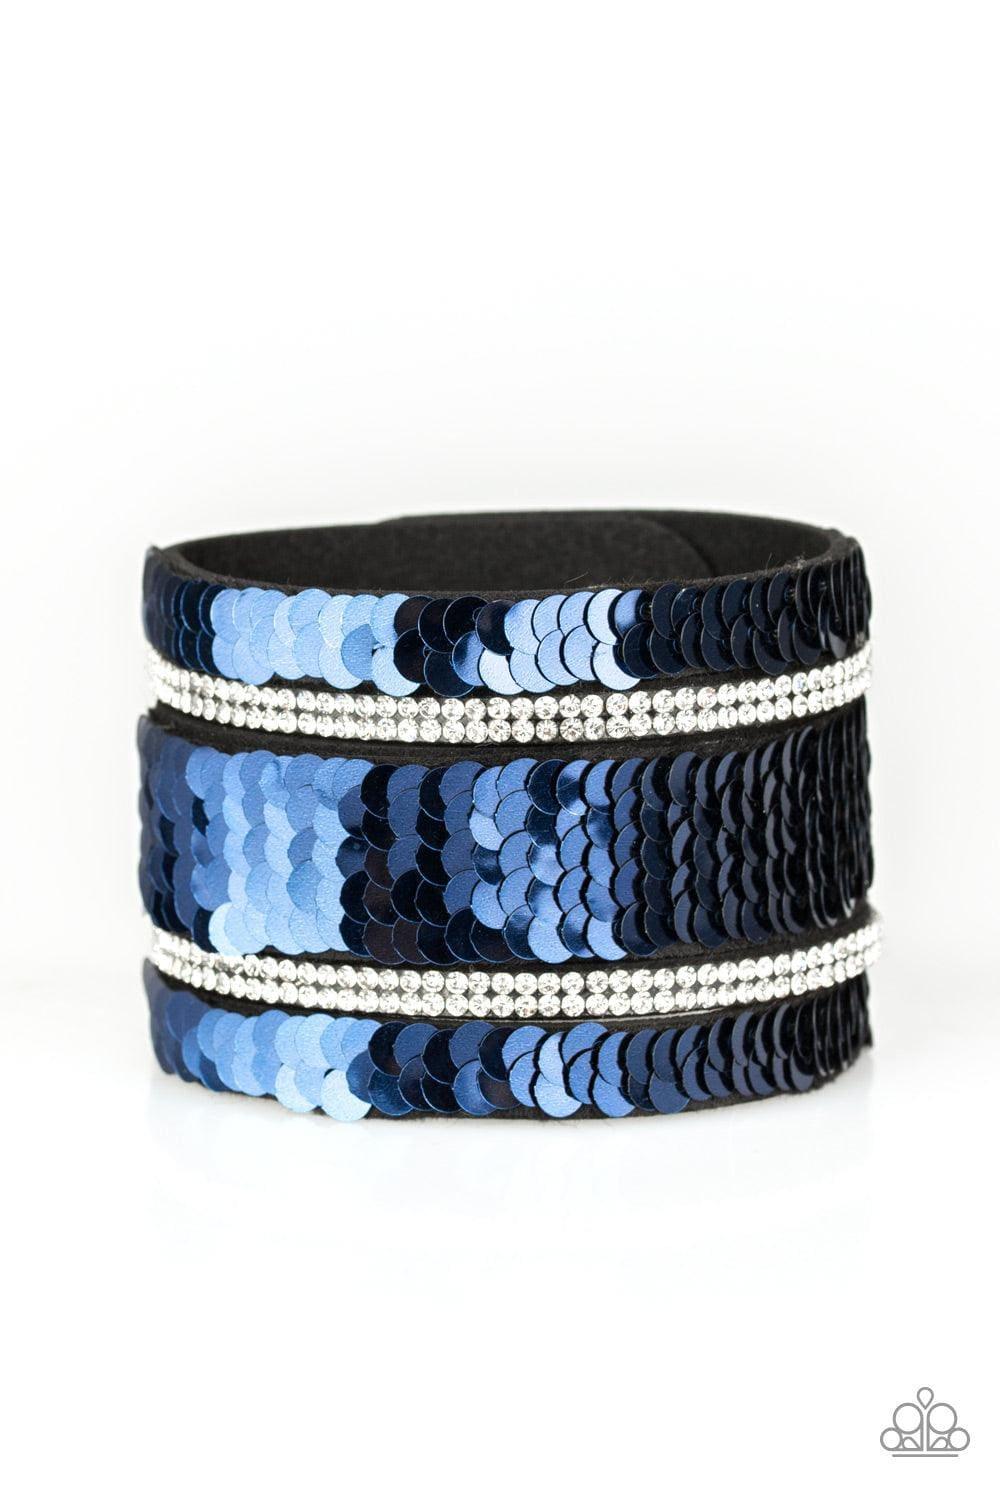 Paparazzi Accessories - Mermaid Service - Blue/silver Snap Bracelet - Bling by JessieK